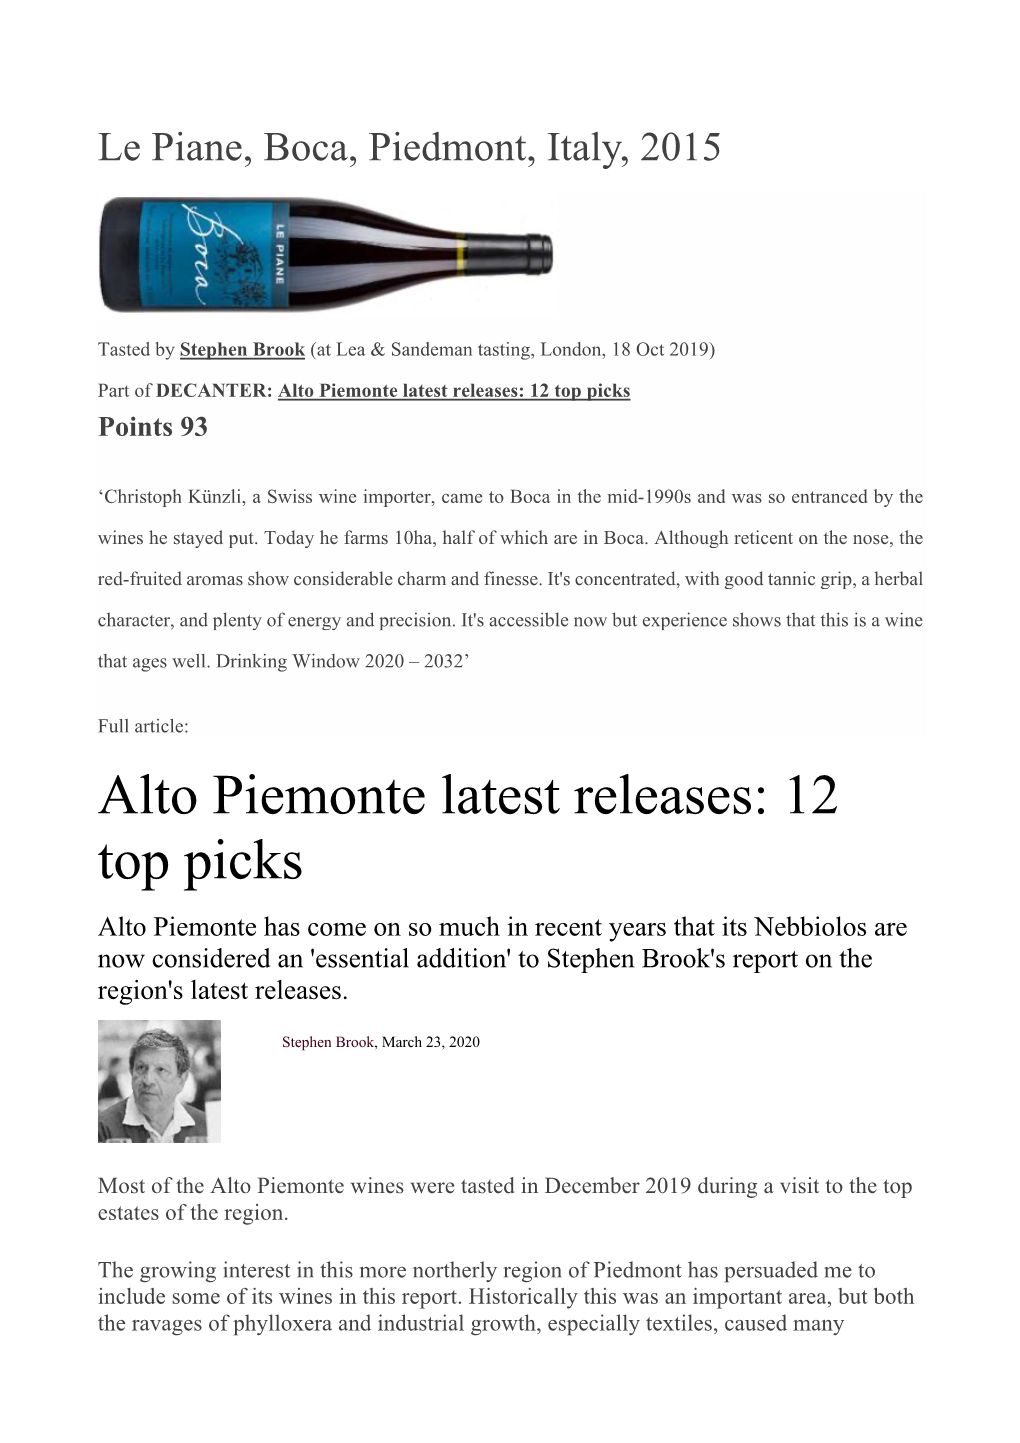 Alto Piemonte Latest Releases: 12 Top Picks